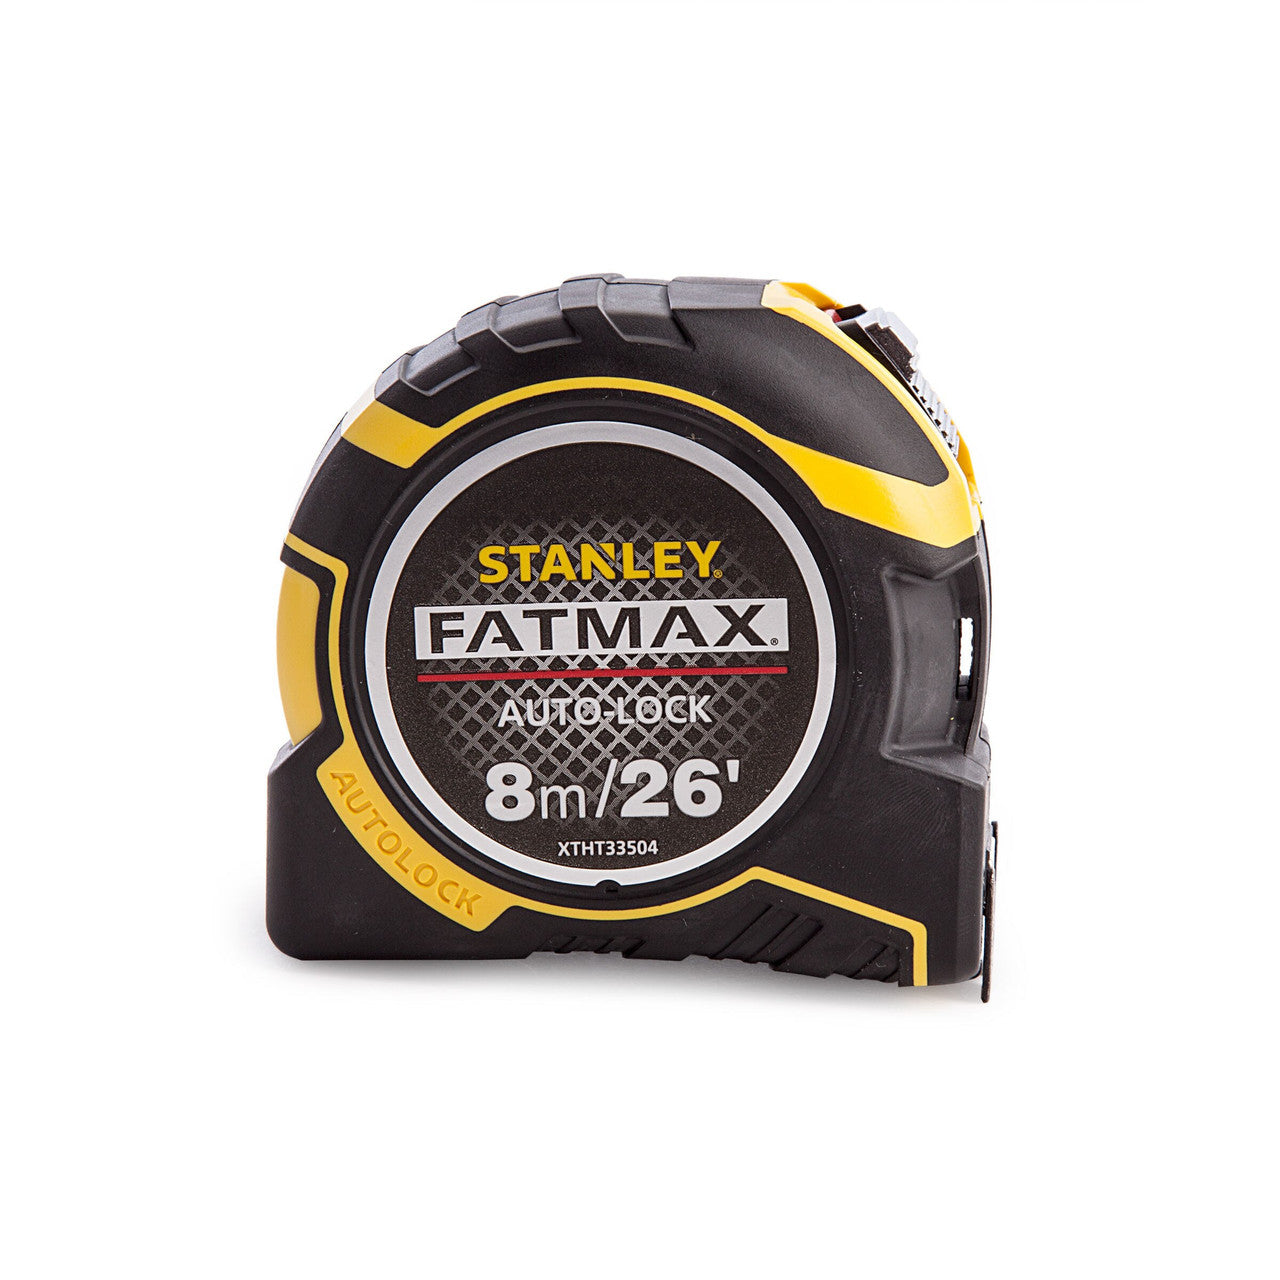 Stanley XTHT0-33504 Fatmax Autolock Tape 8m / 26ft